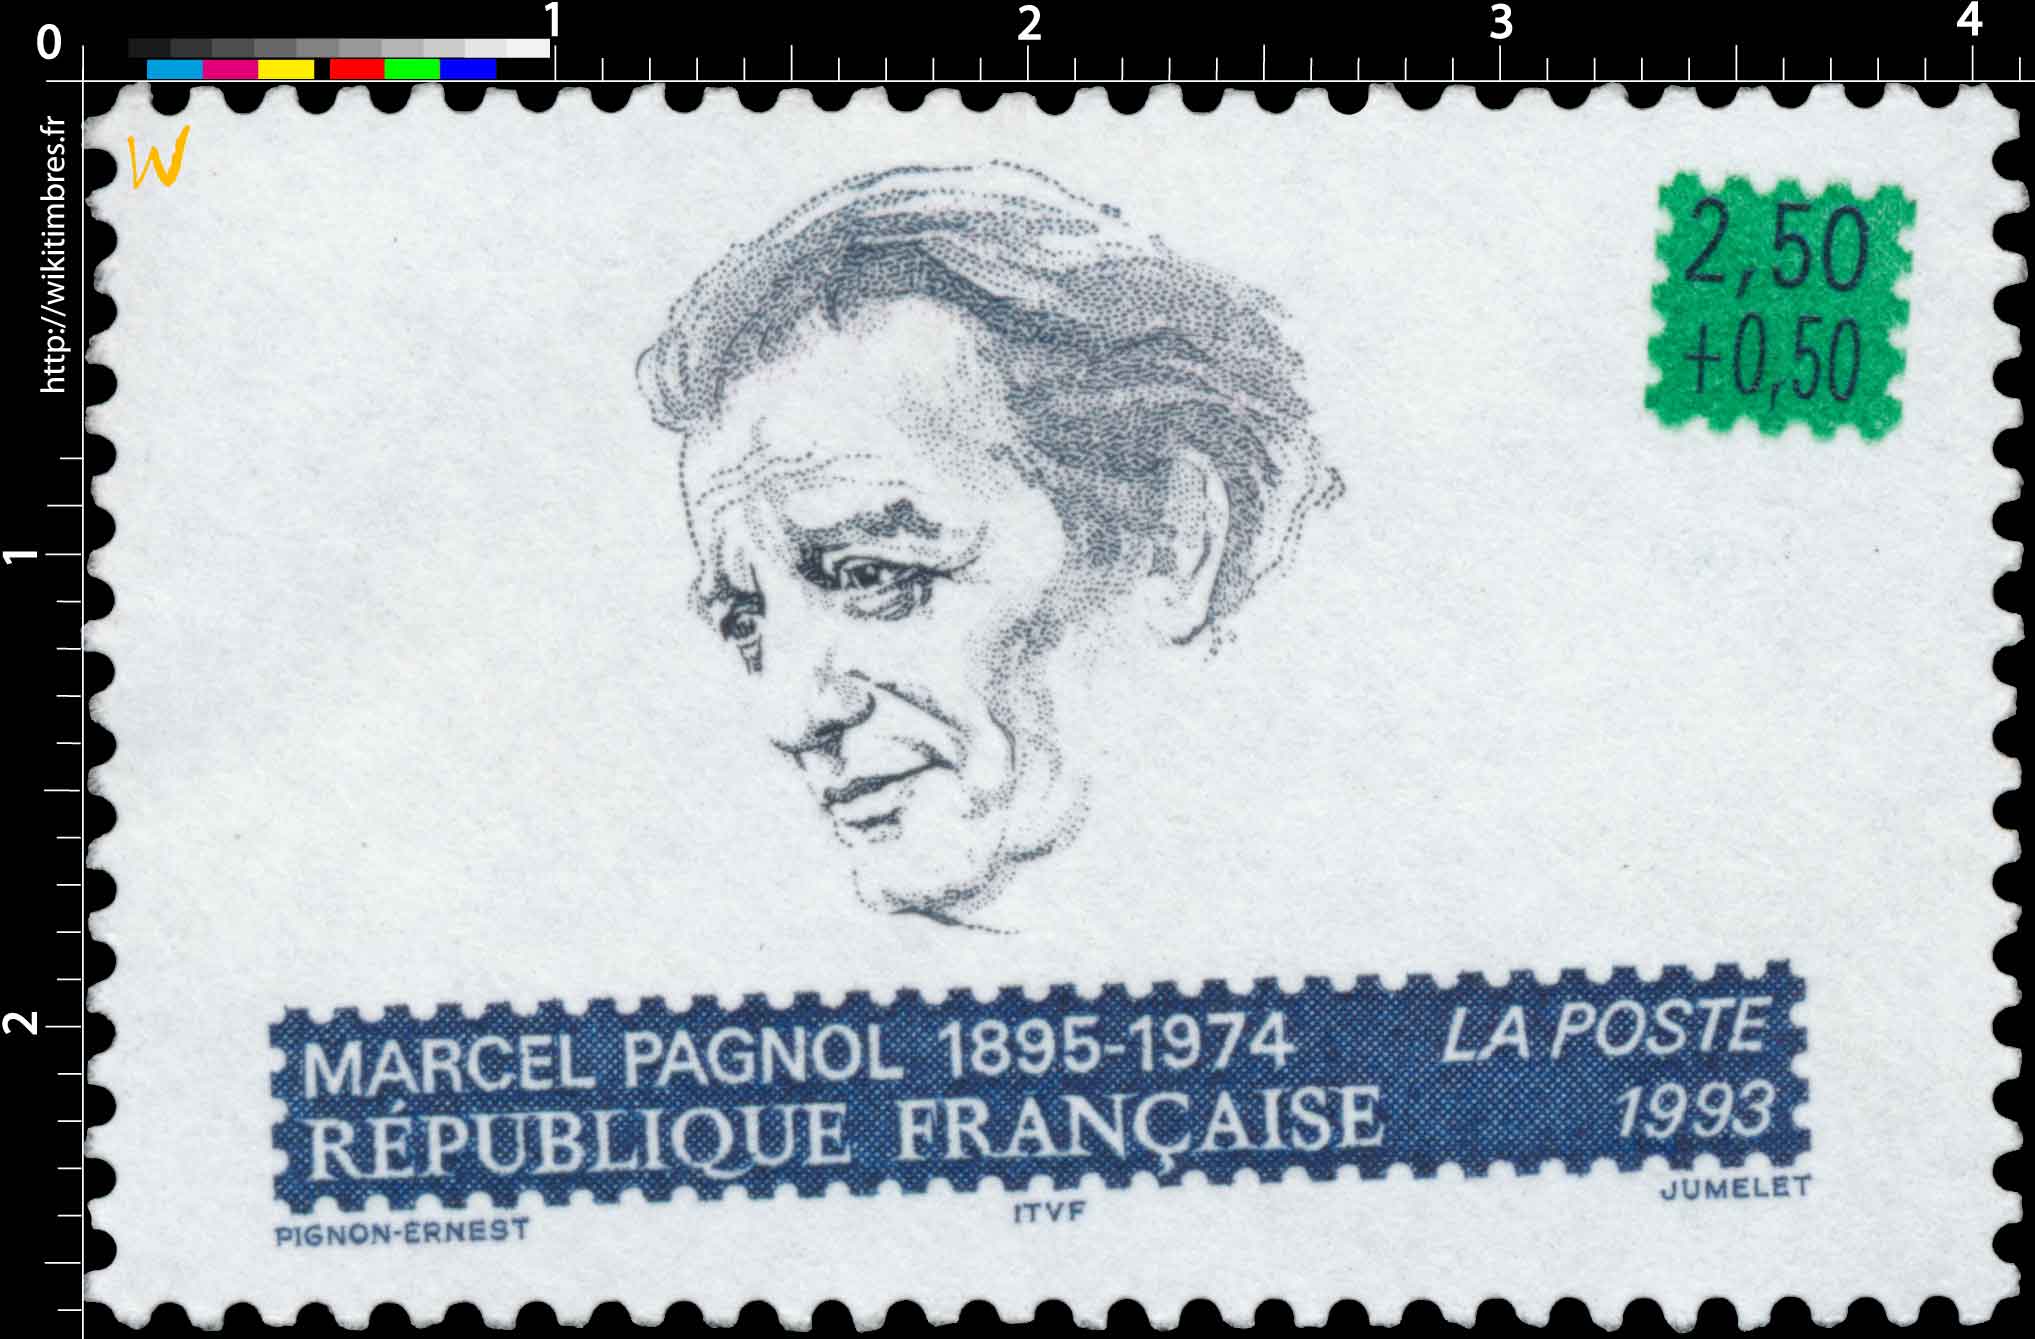 1993 MARCEL PAGNOL 1895-1974